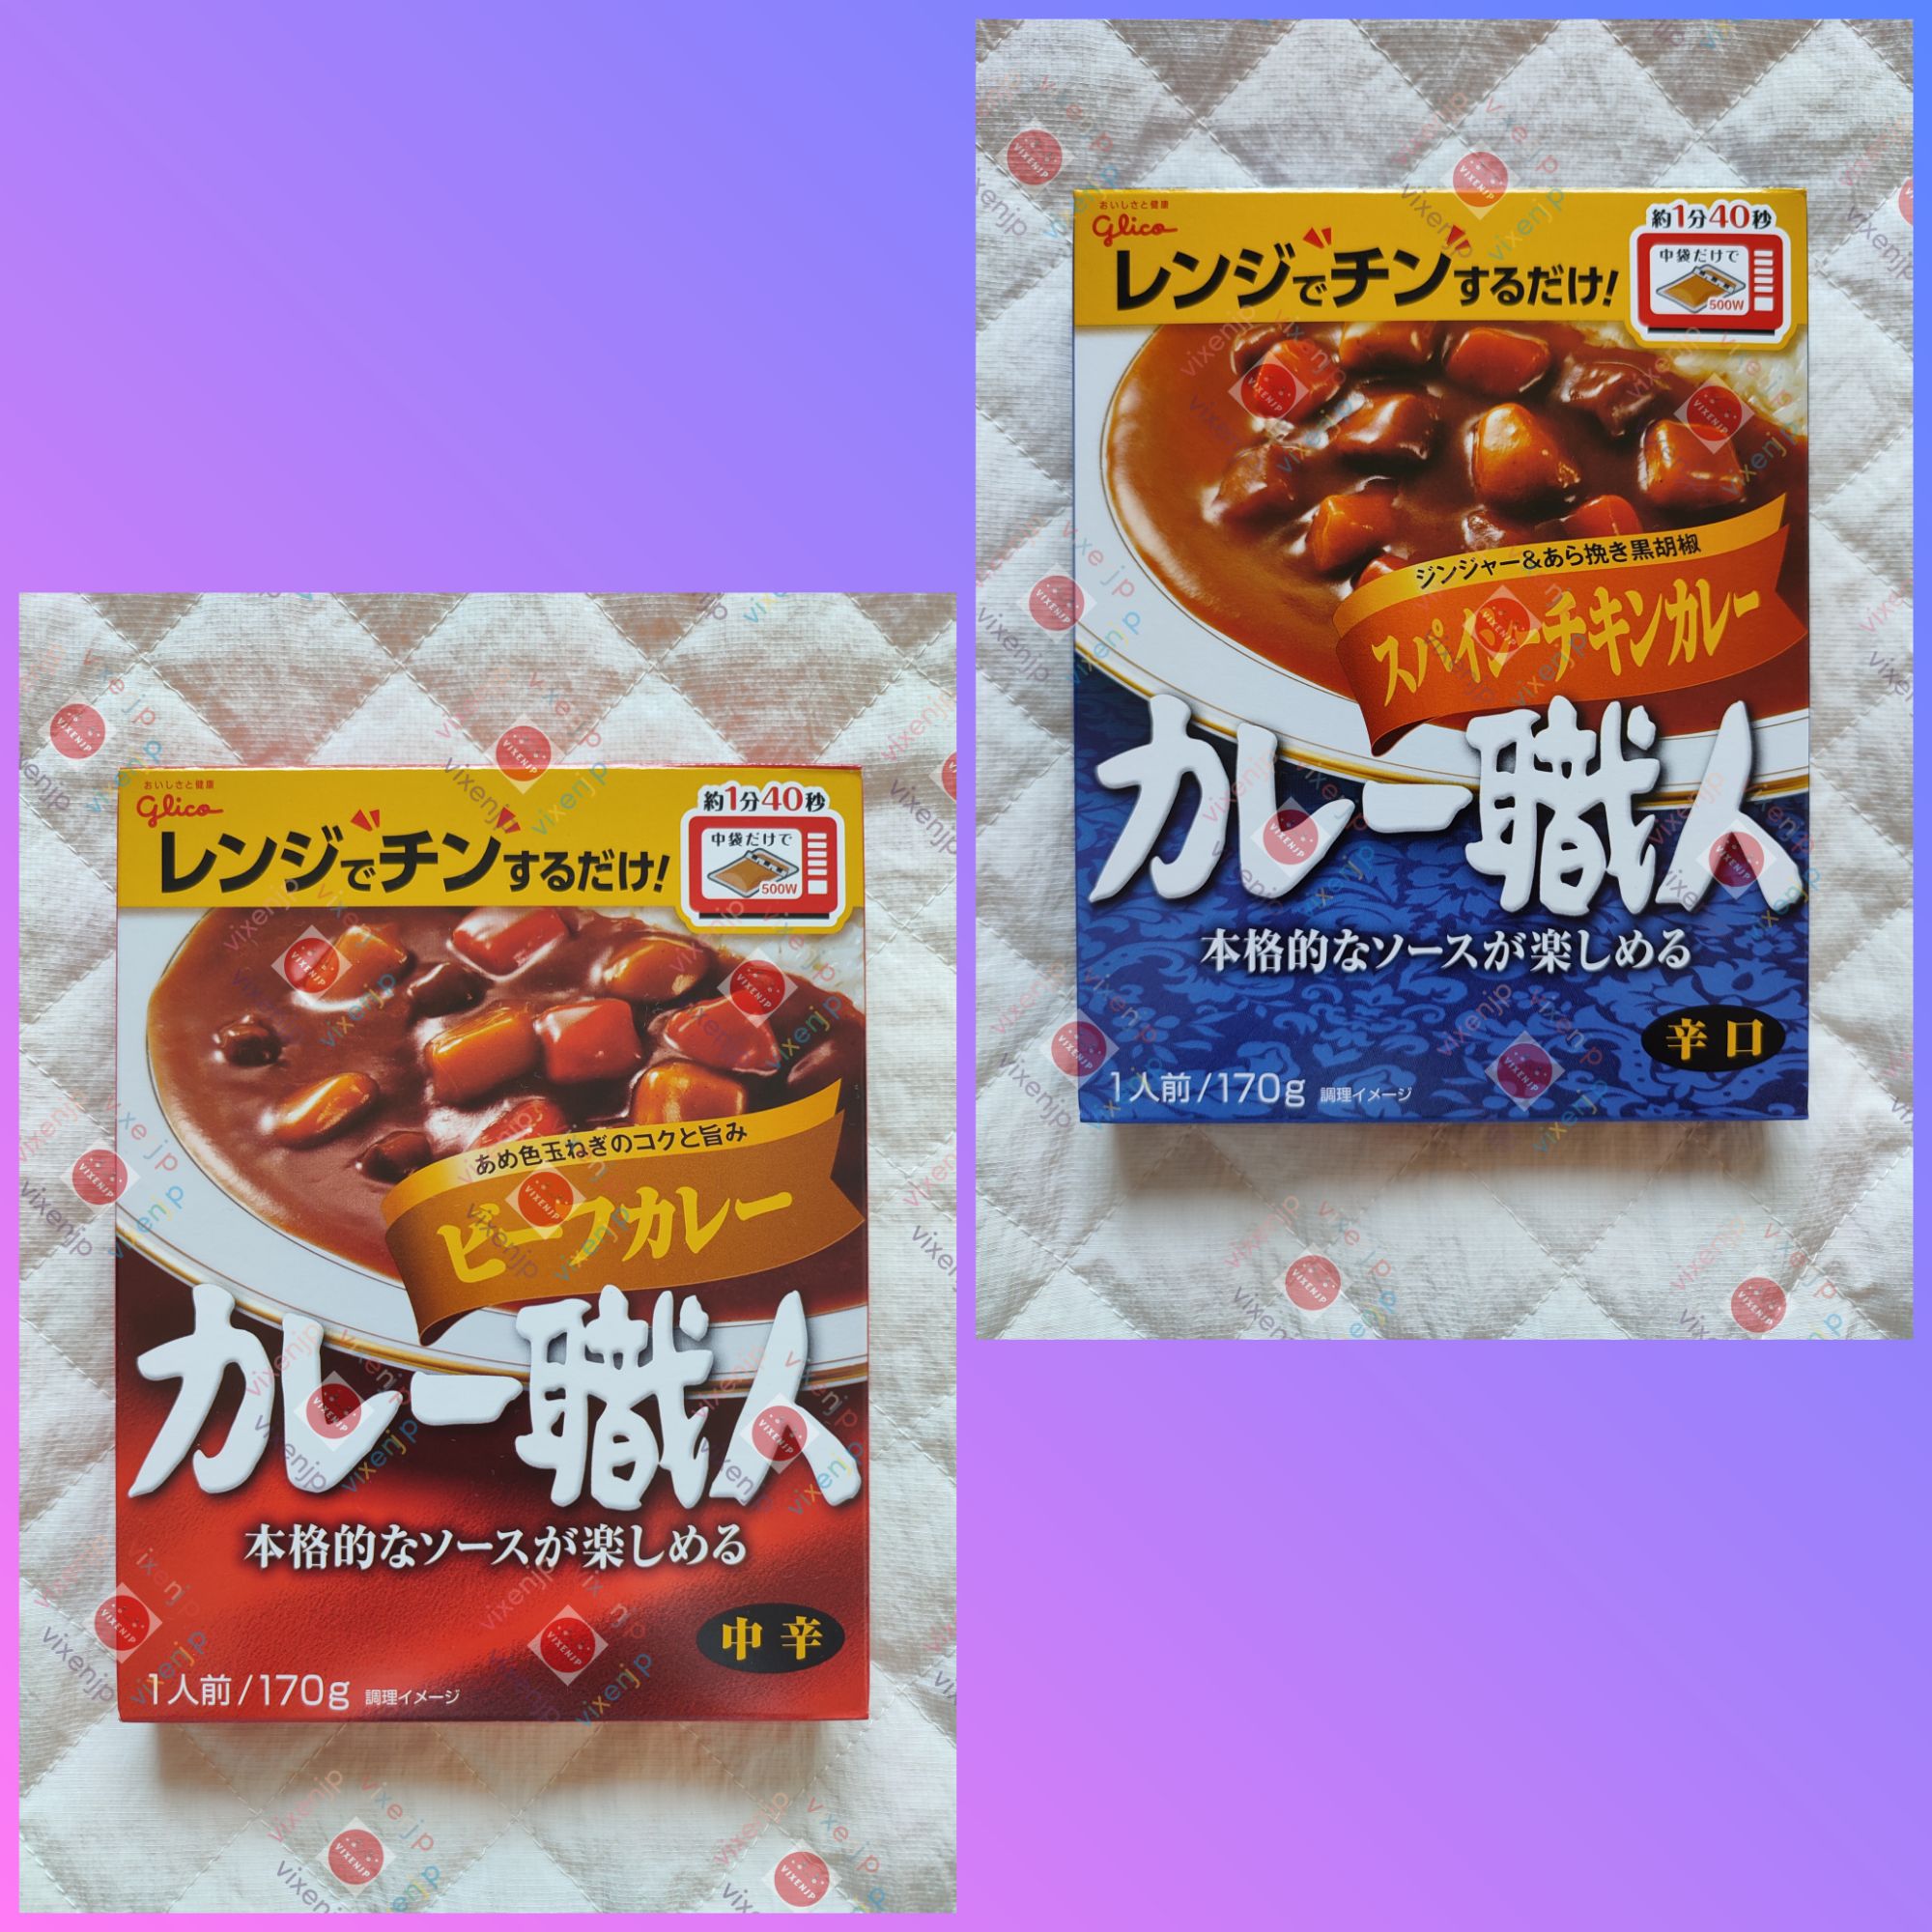 S&B Japanese Golden Curry Barikara Super Hot Limited Edition 198g